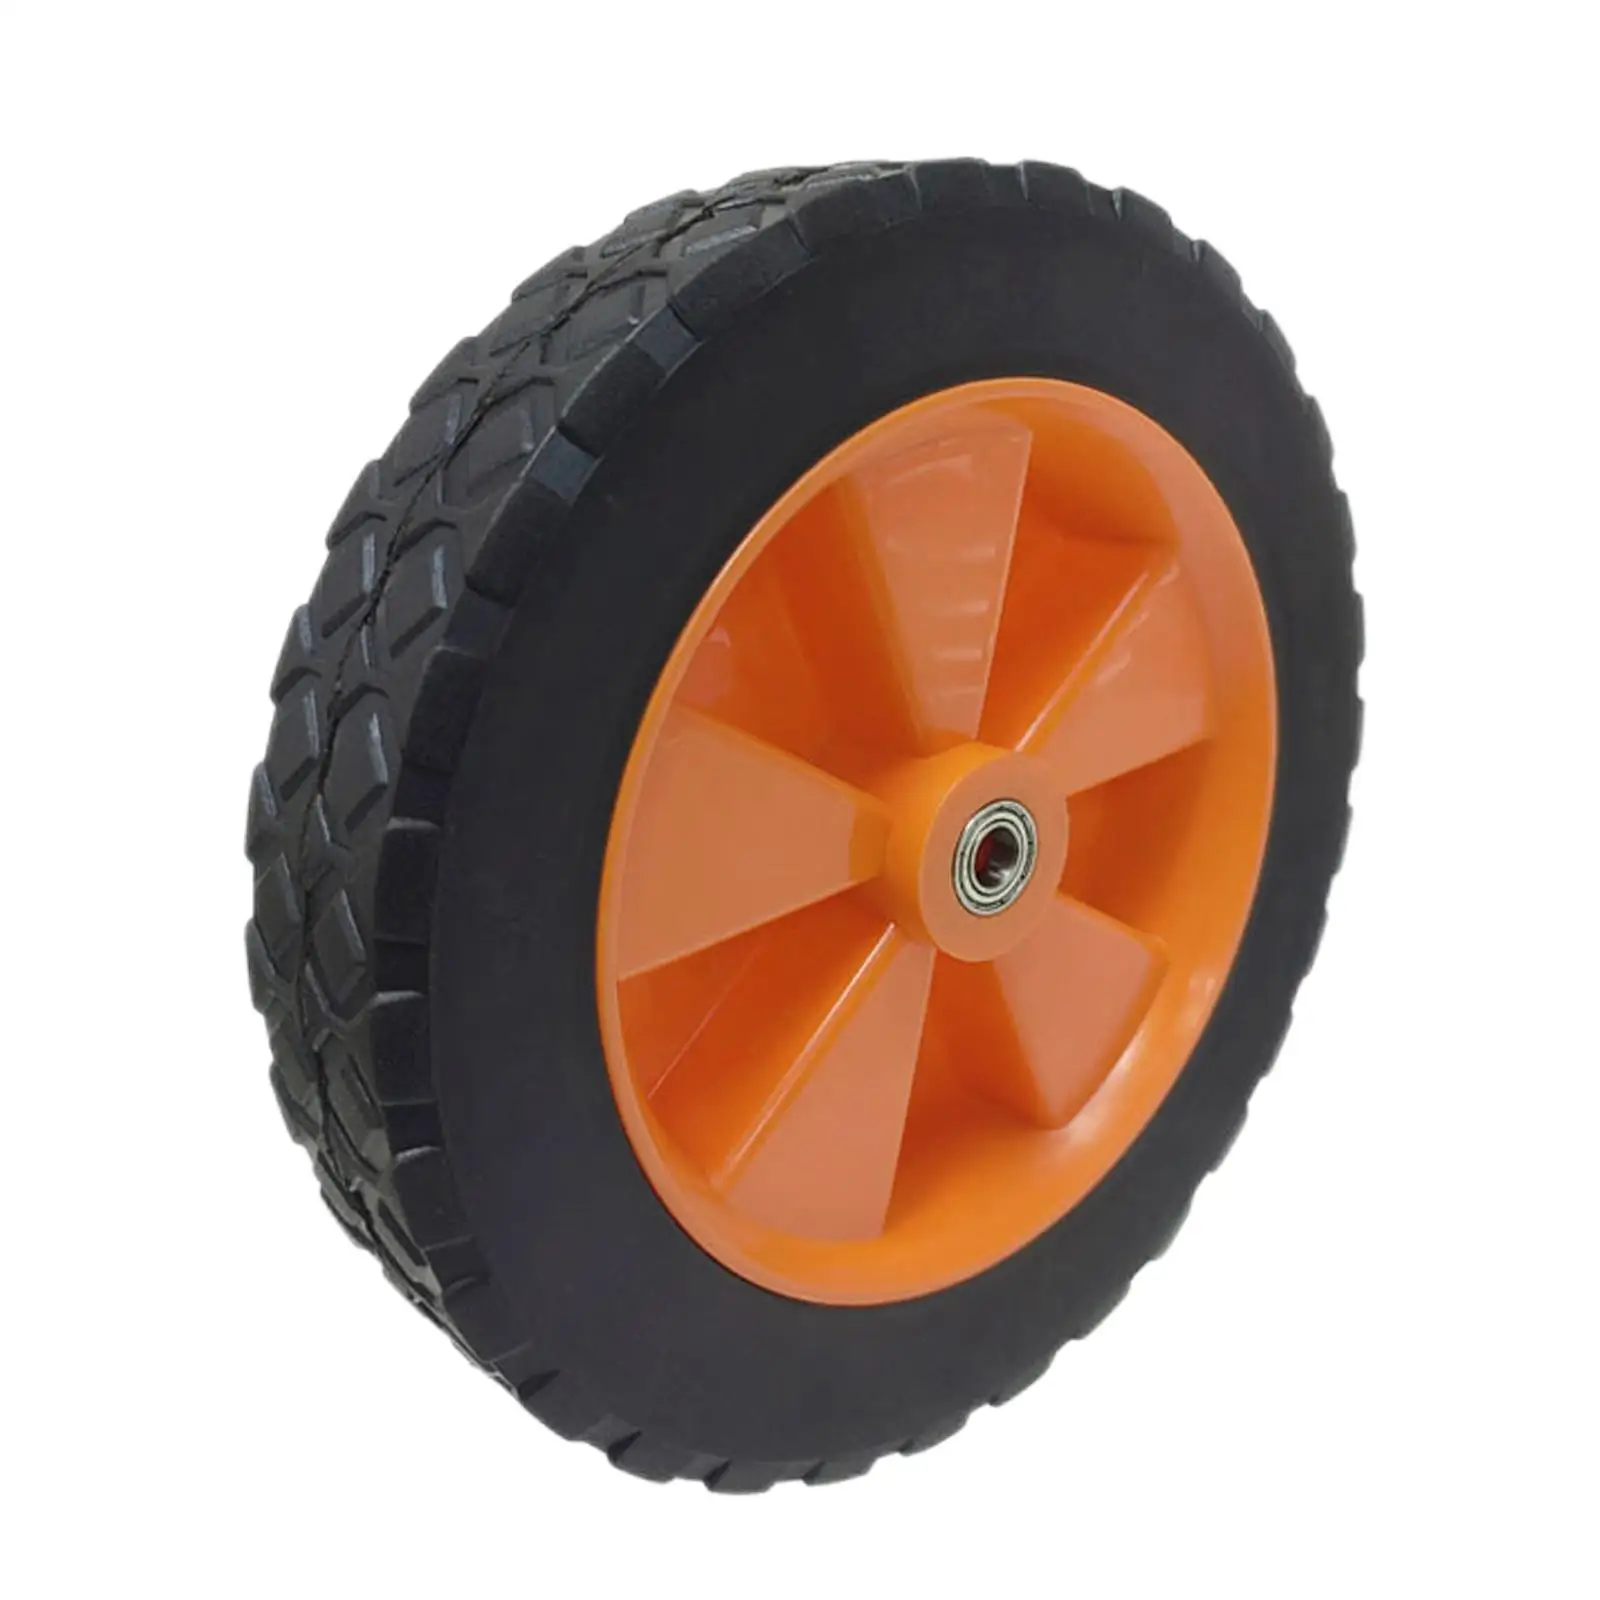 7" Collapsible Wagon Wheel Dual Bearing Rubber for Garden Ca